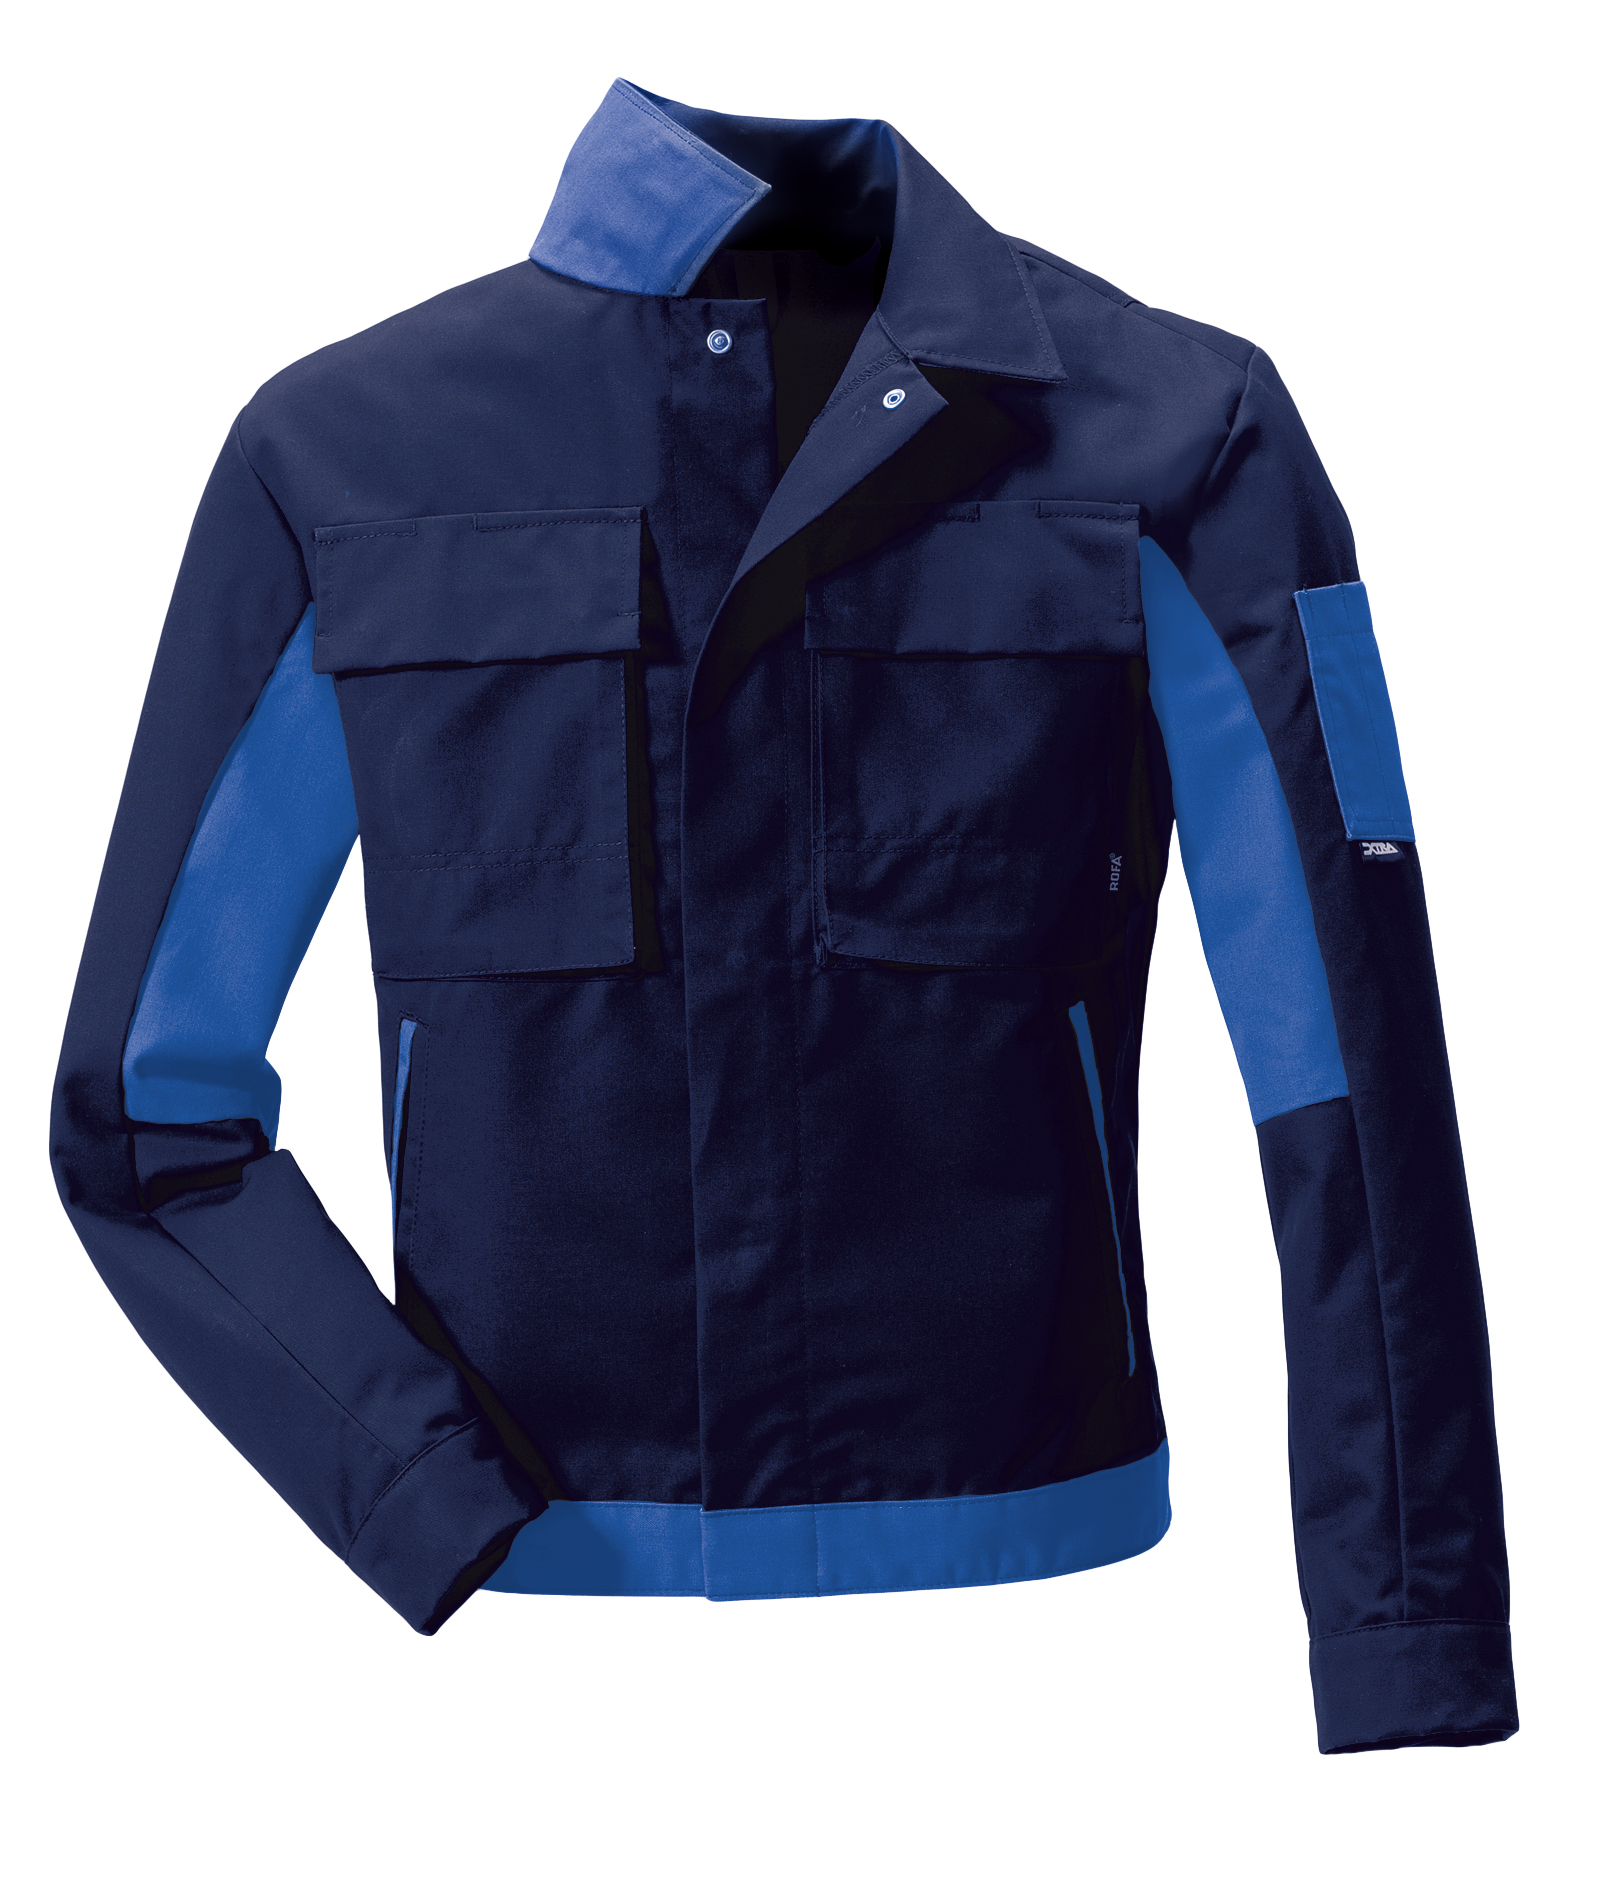 ROFA-Workwear, XTRA-Arbeits-Berufs-Jacke, ca. 250 g/m², marine-kornblau